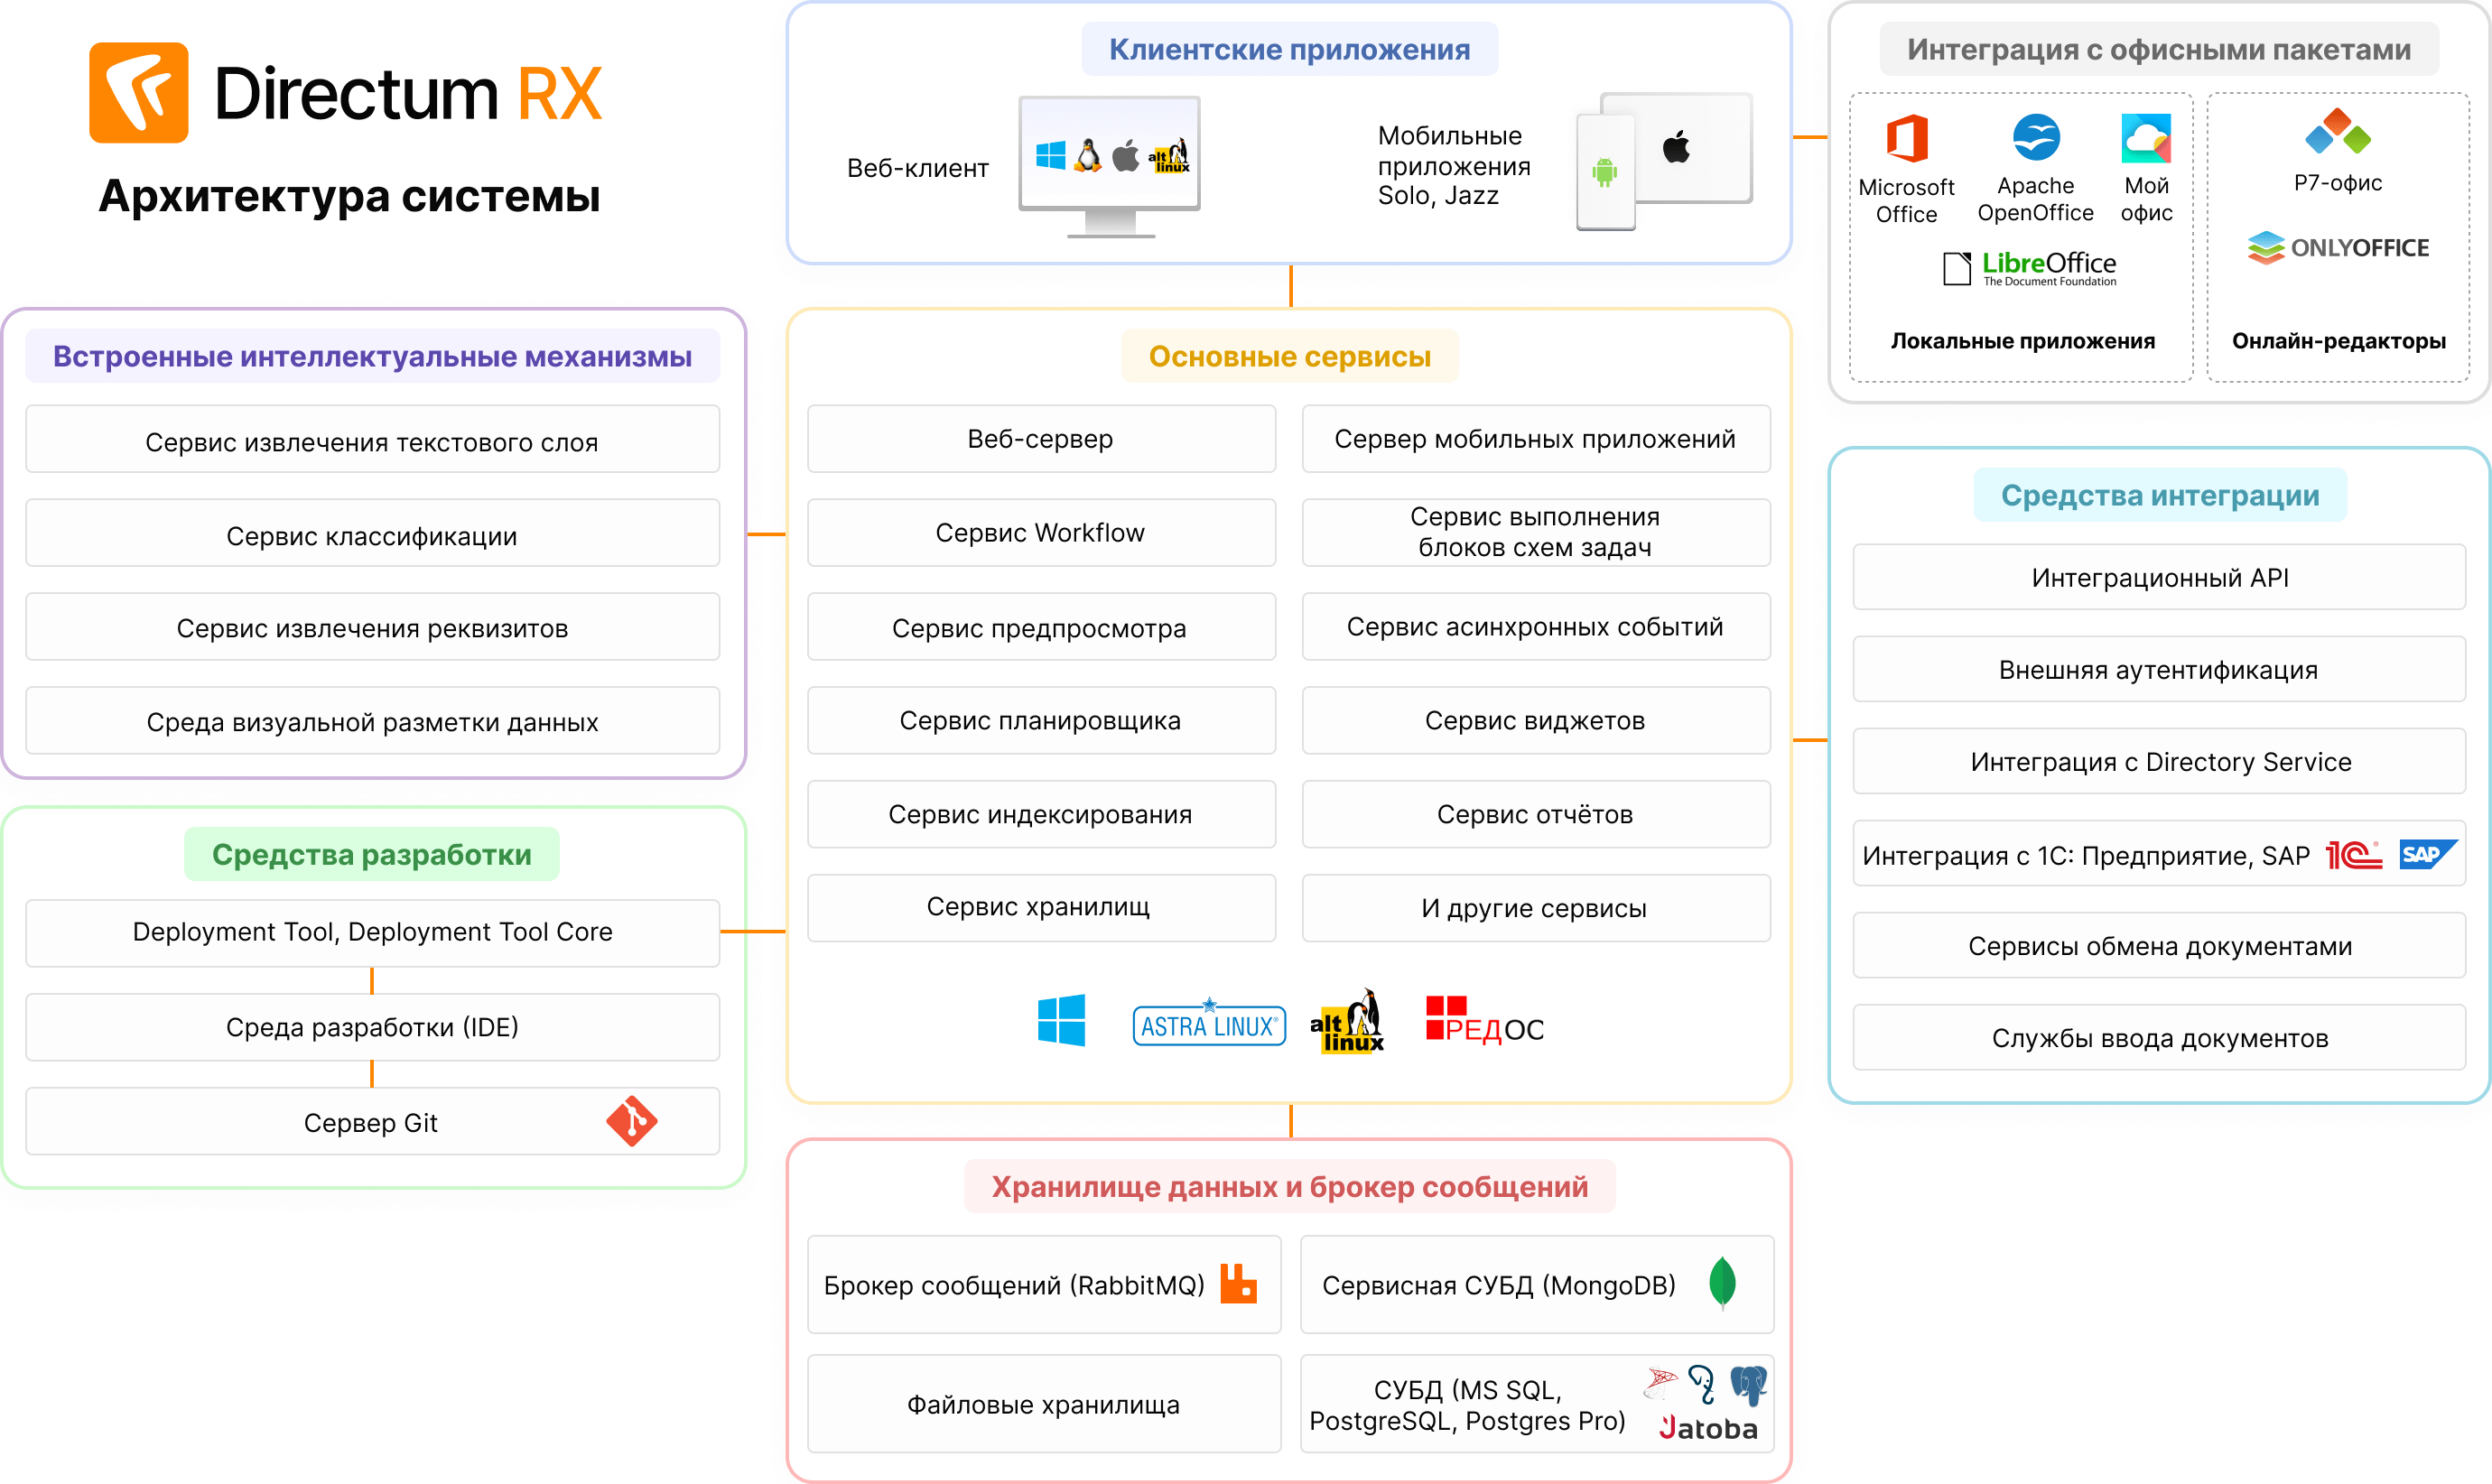 Схема архитектуры Directum RX